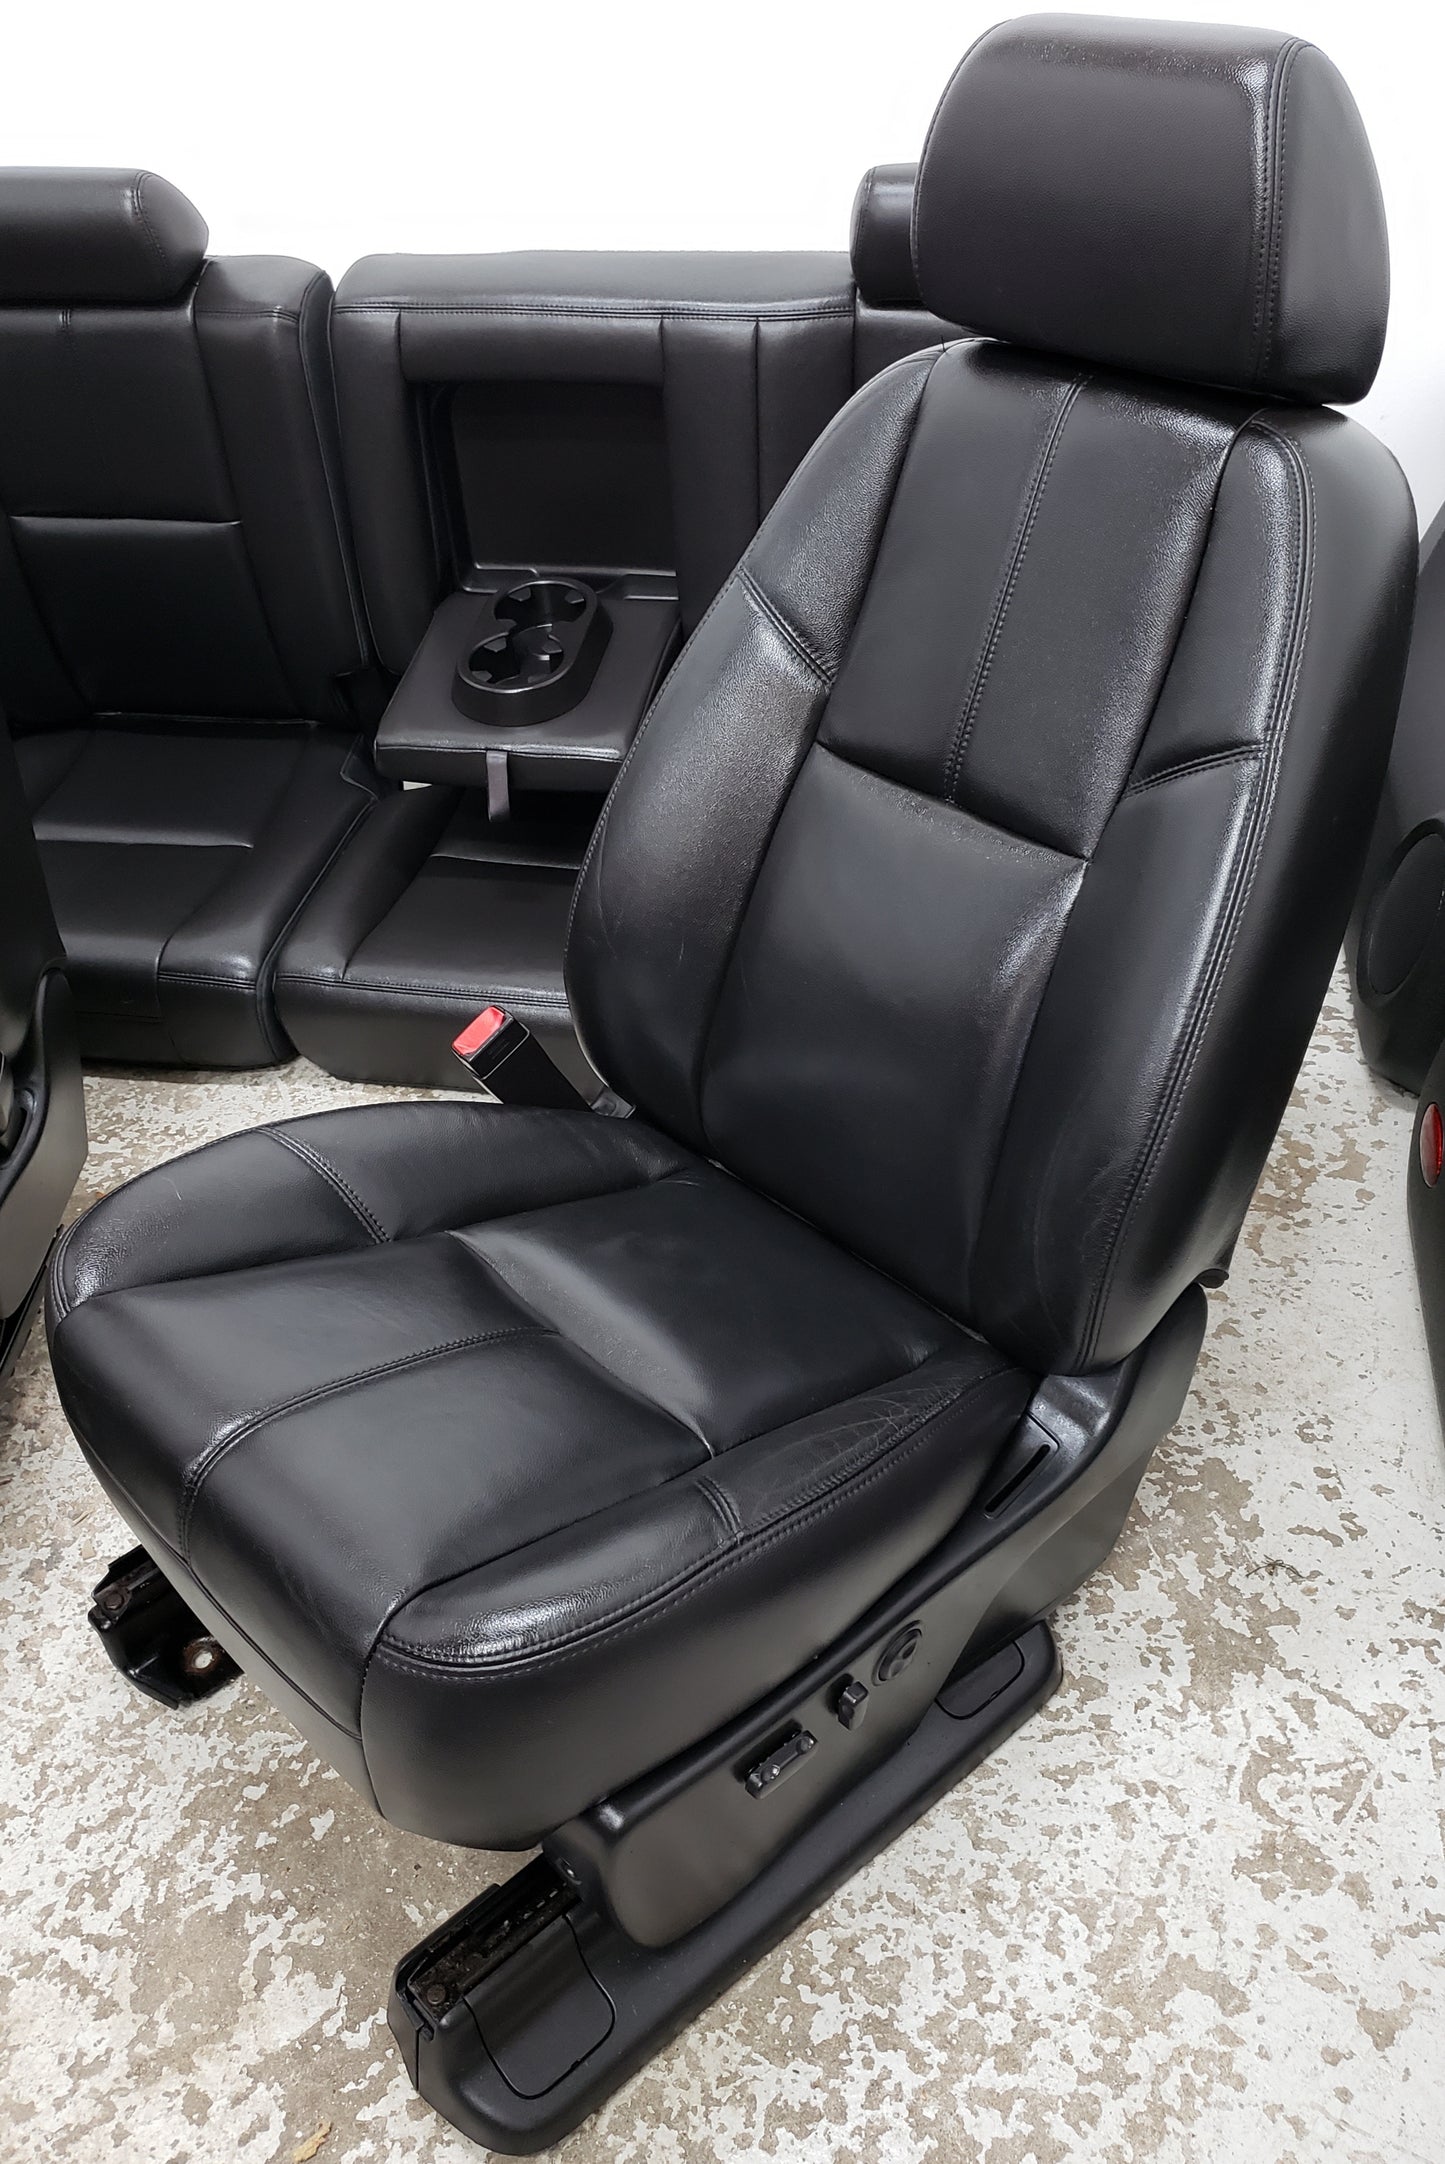 Chev Silverado 2013 Black Leather Truck Seats Interior GMC Sierra